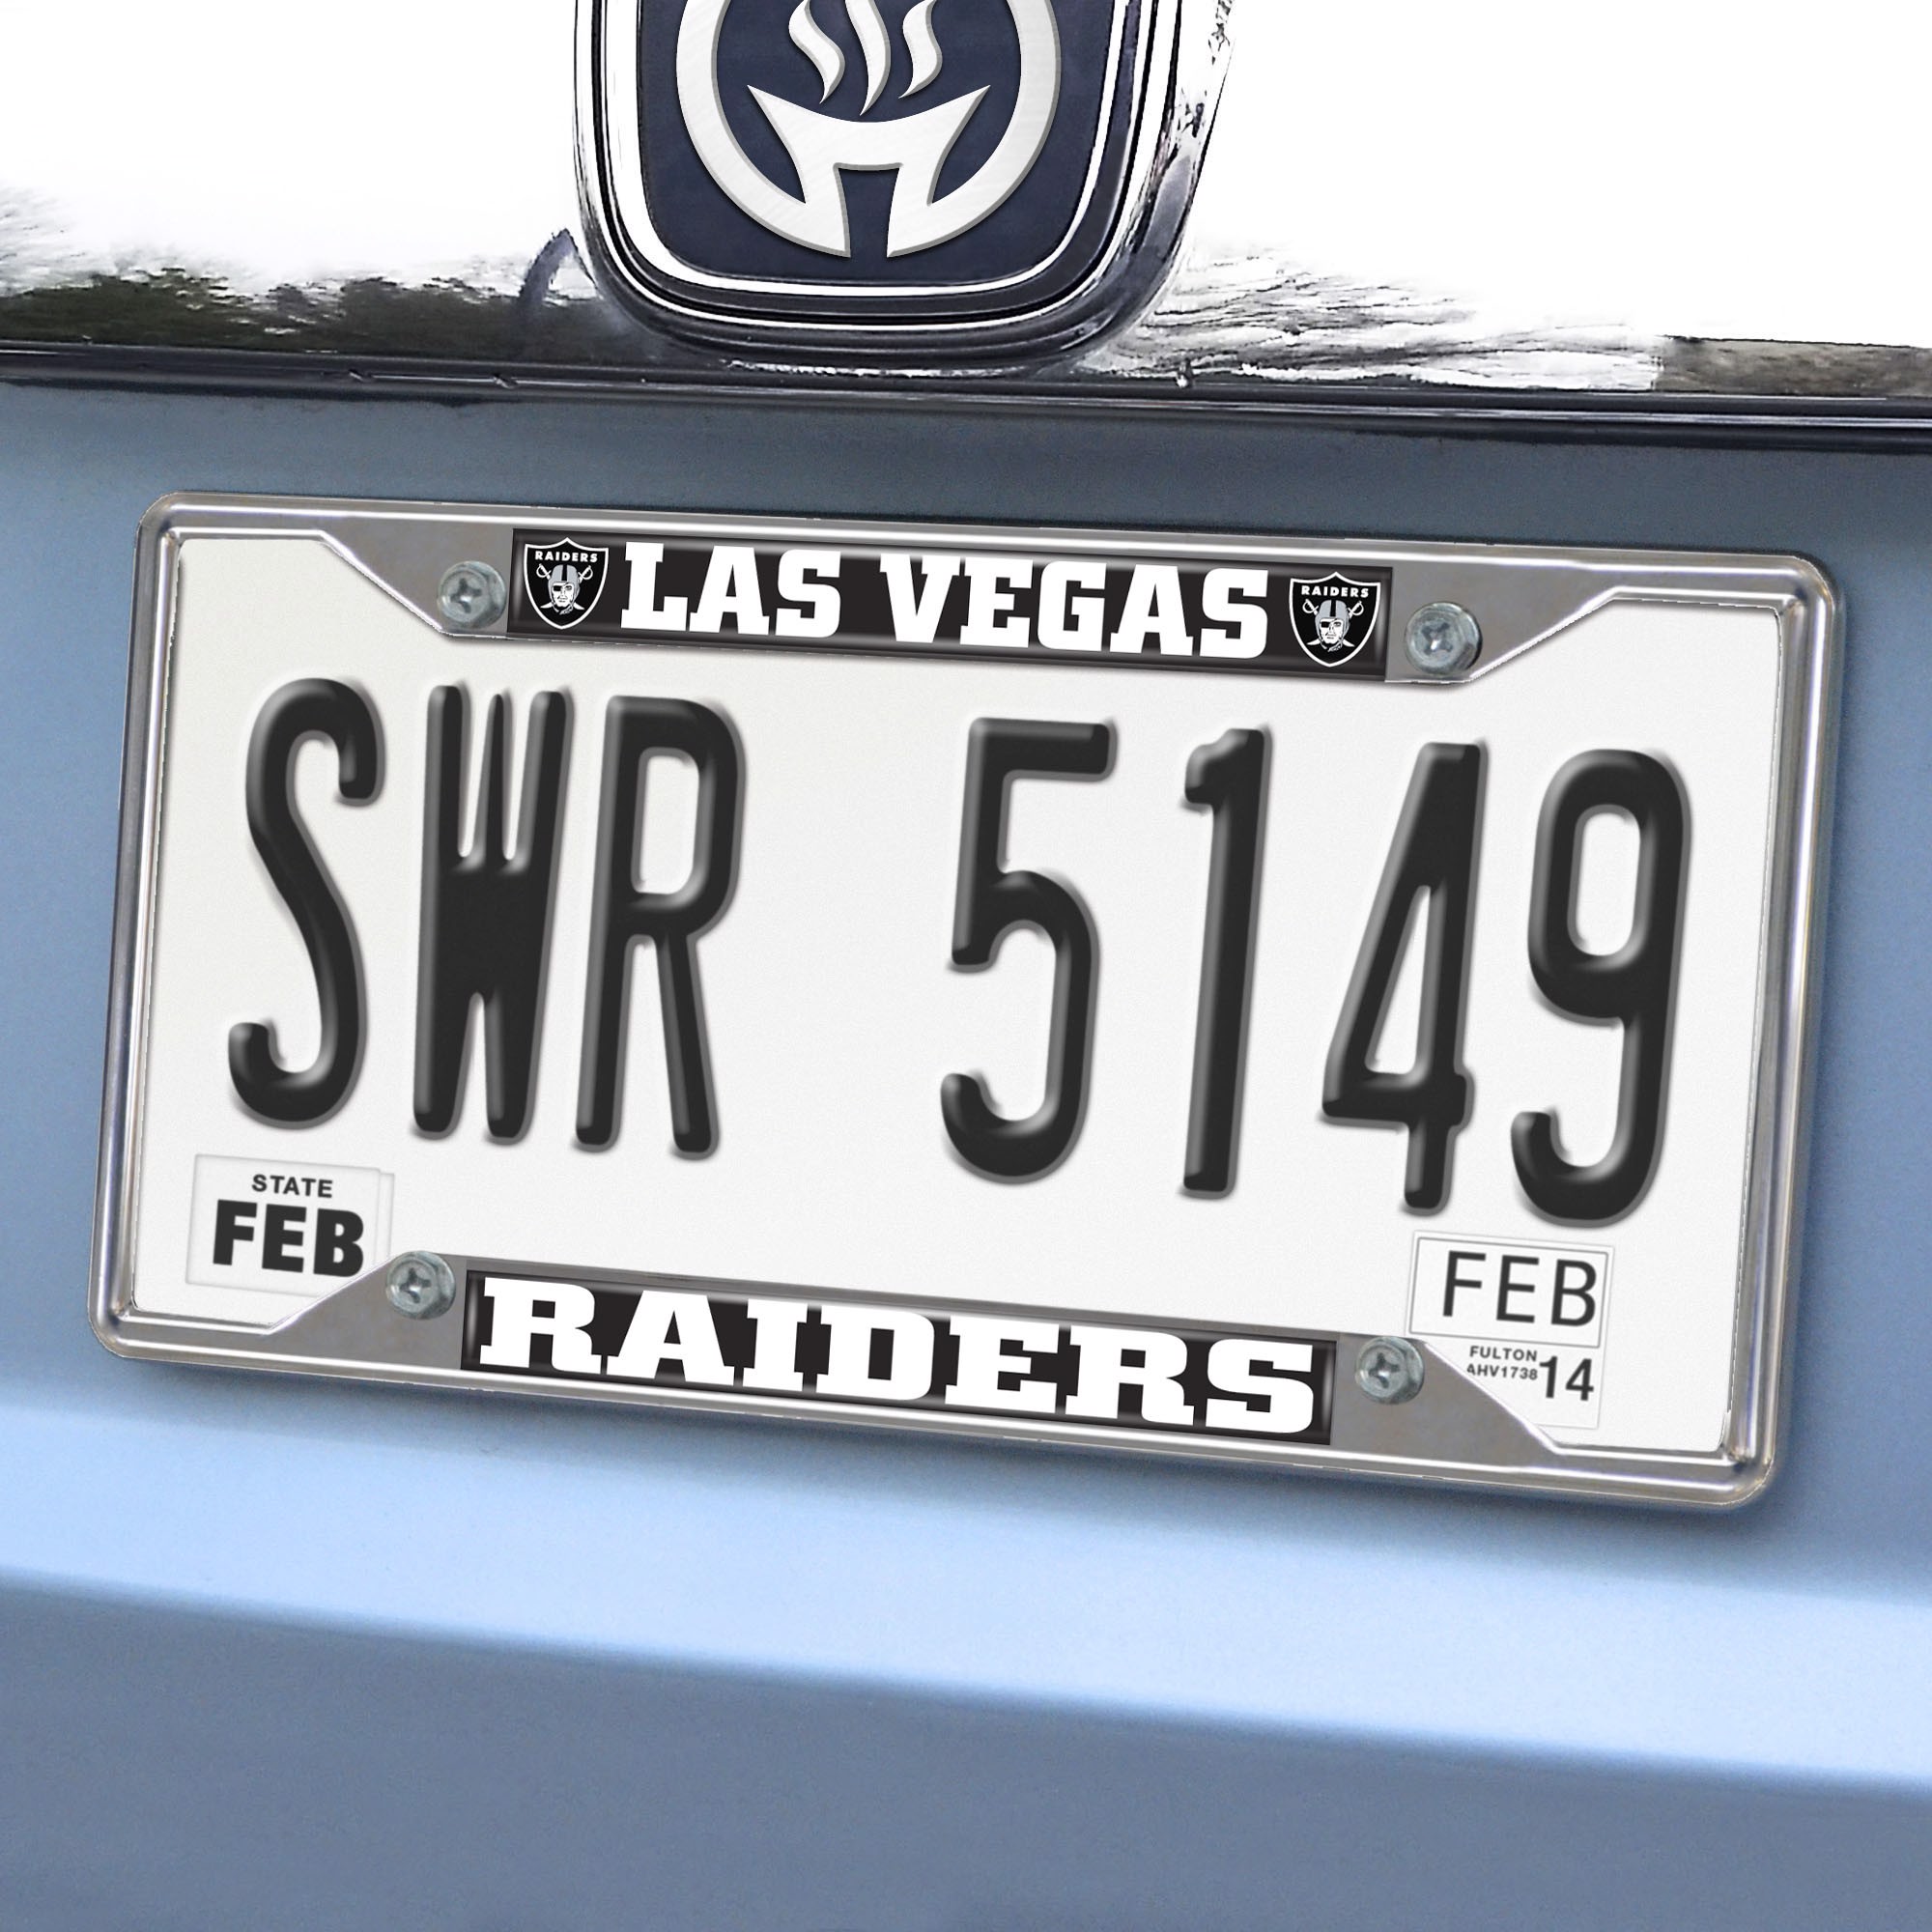 WinCraft Las Vegas Raiders Just Win Baby Metal License Plate Frame